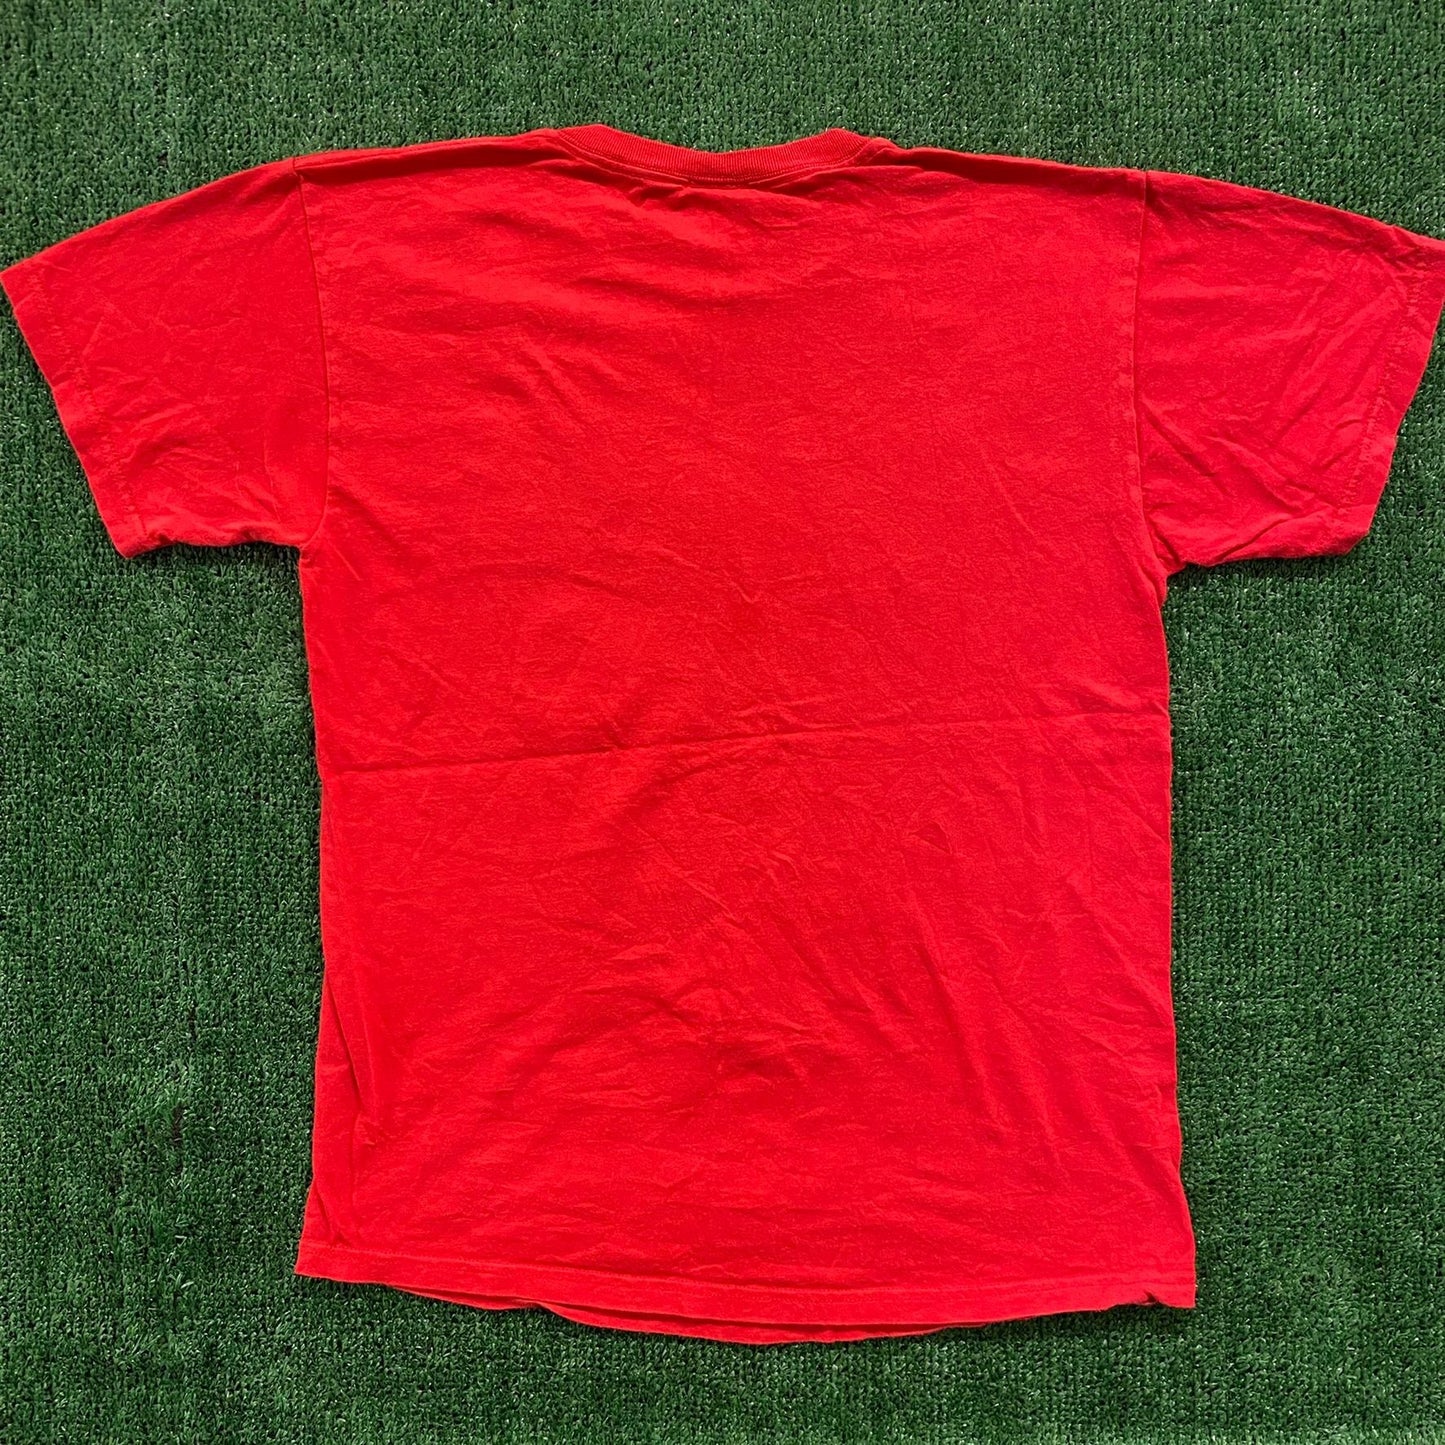 Kansas City Chiefs Vintage Football T-Shirt